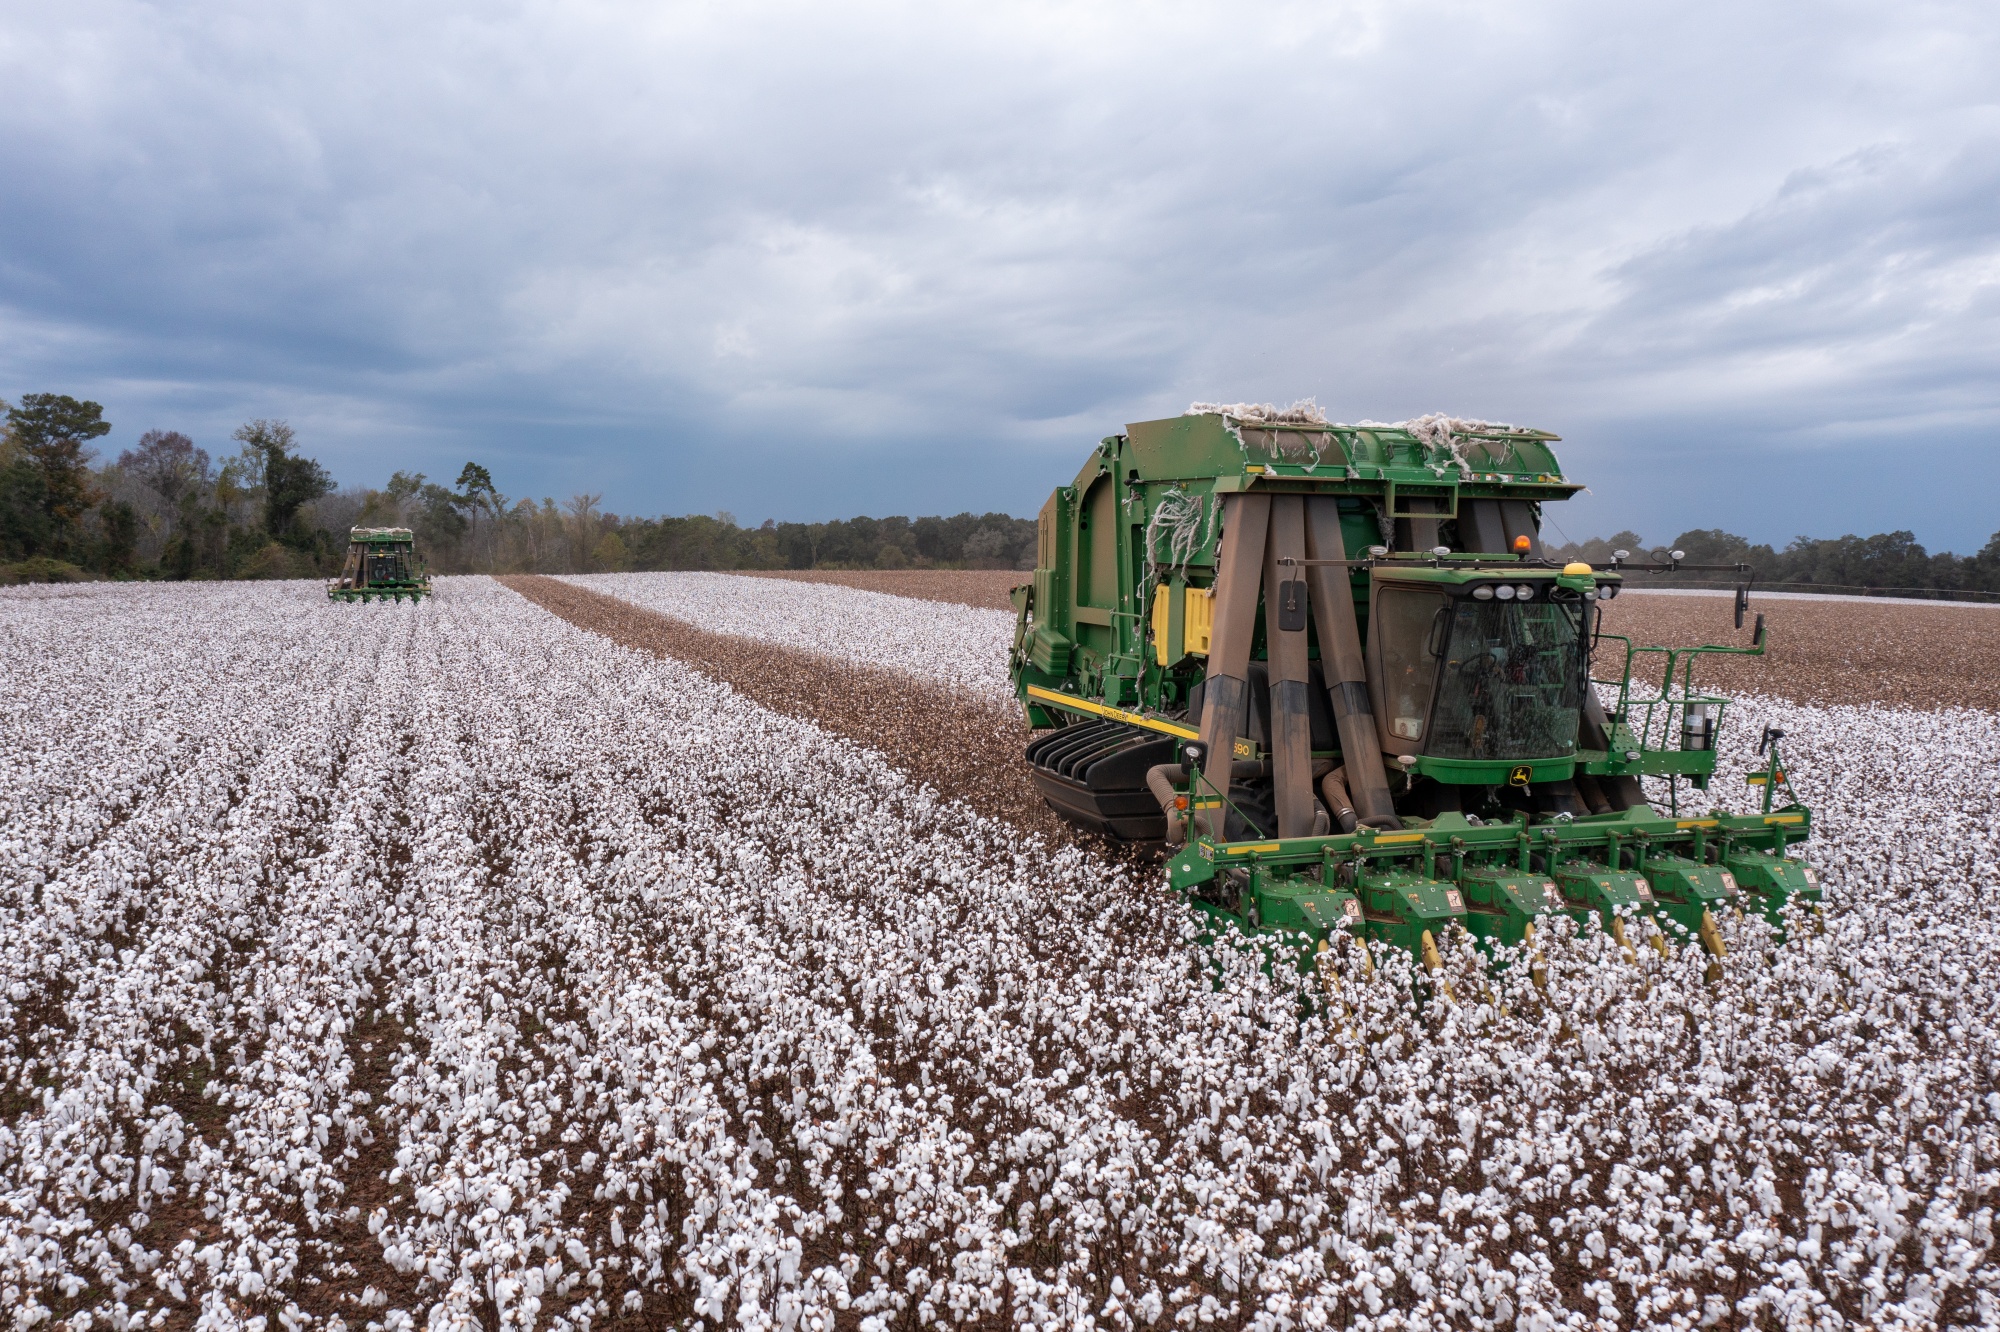 2023 cotton season: 'Most uncertain' economist has analyzed